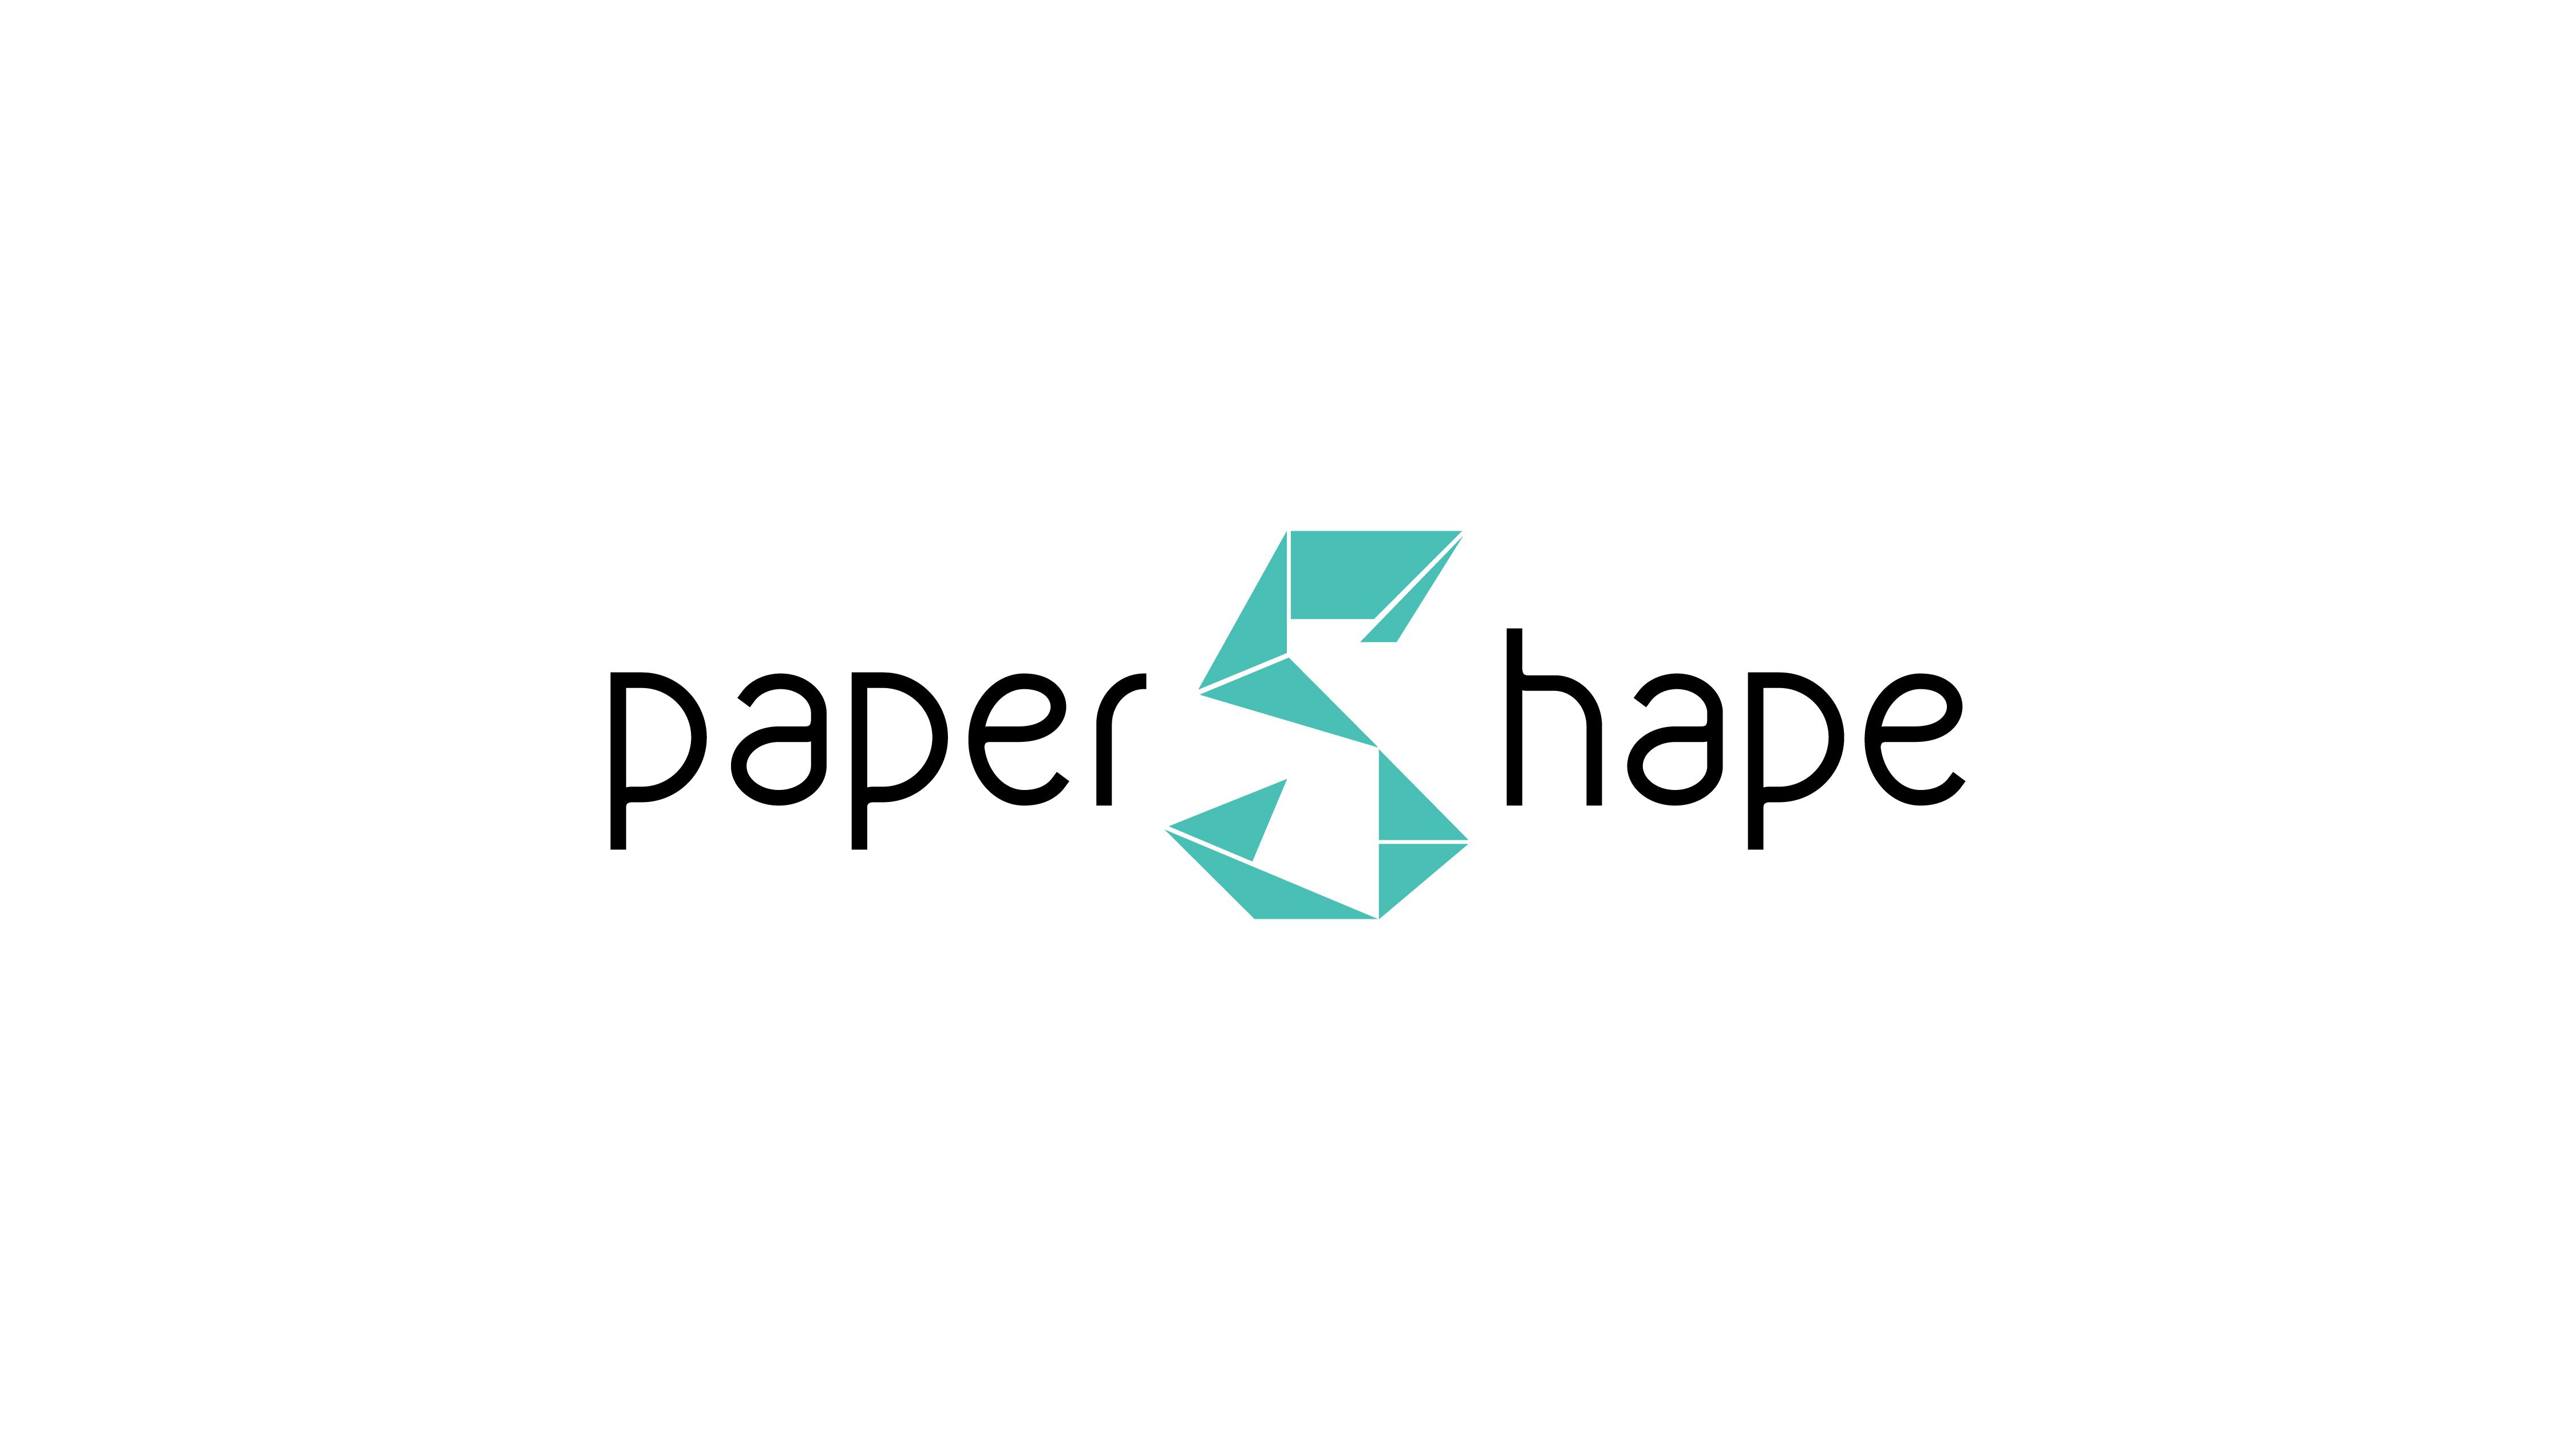 PaperShape